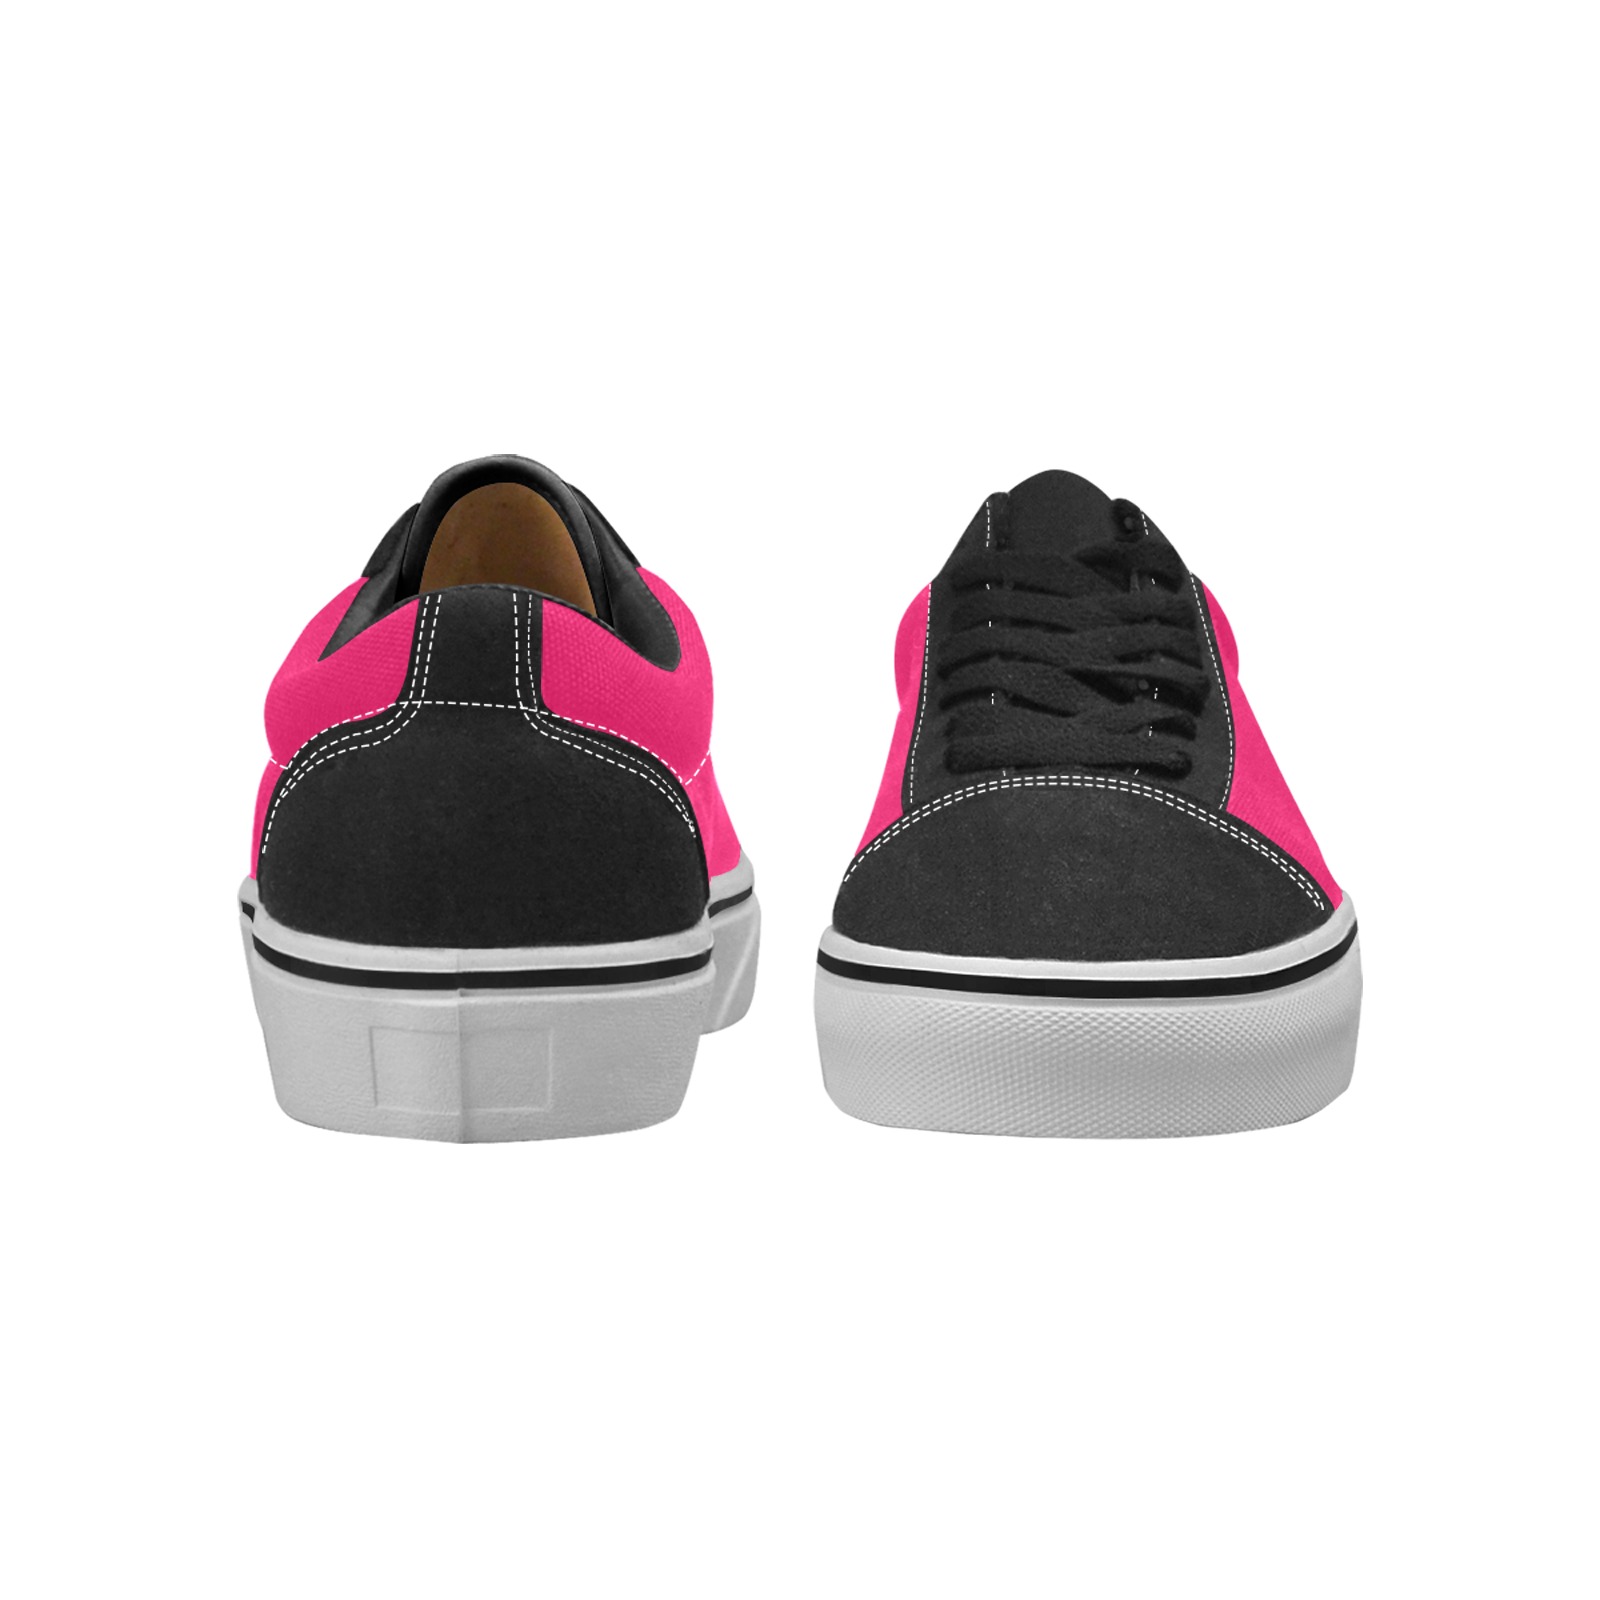 color ruby Women's Low Top Skateboarding Shoes (Model E001-2)